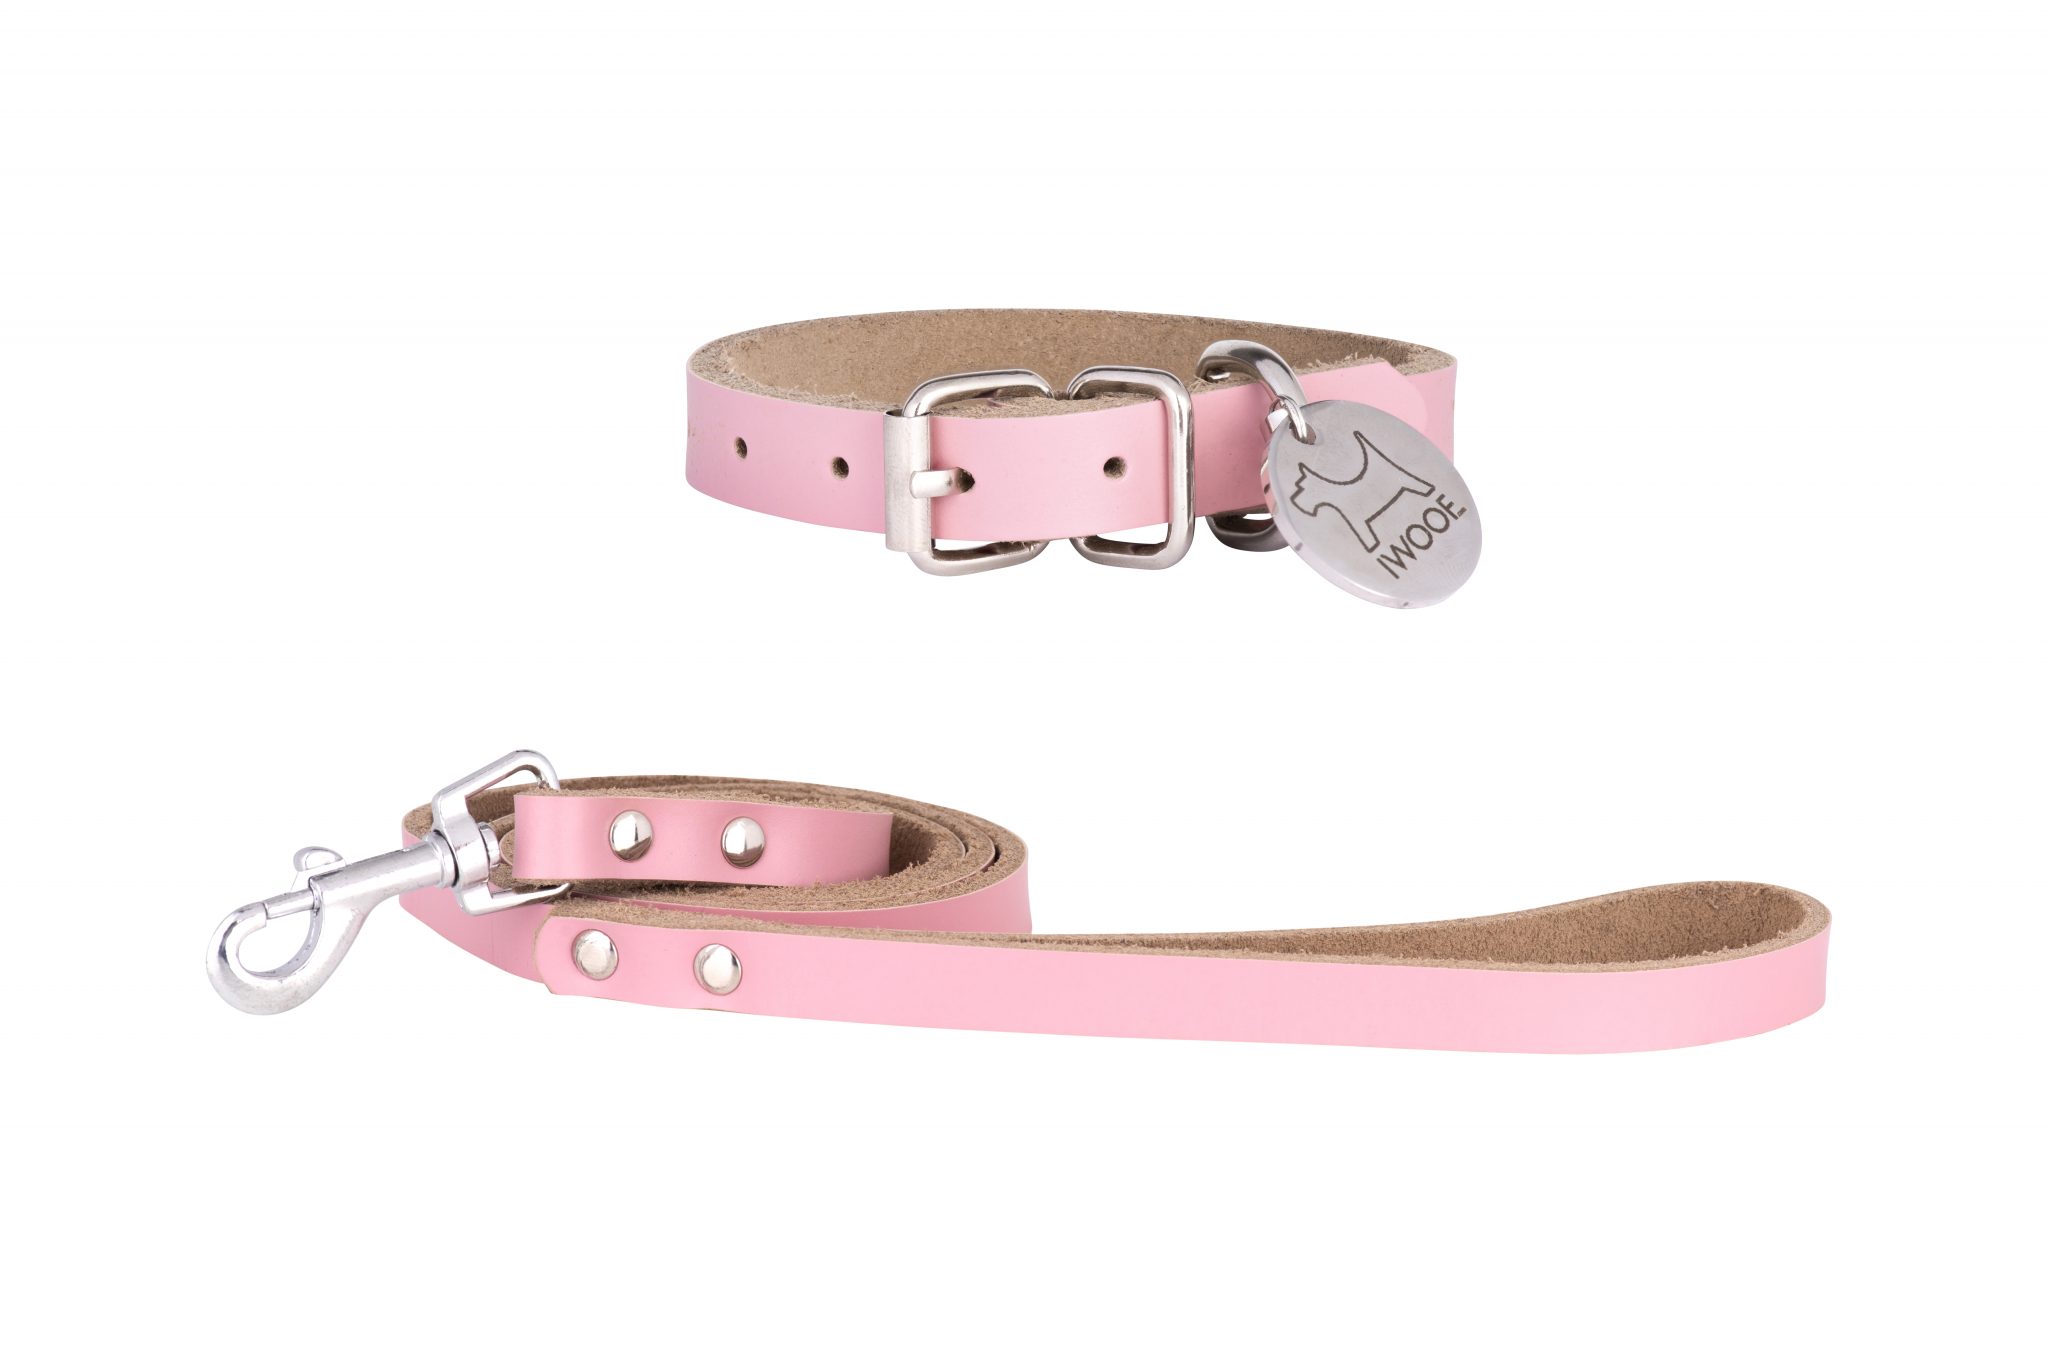 MORWENNA Designer Dog Collar and Lead in Pink